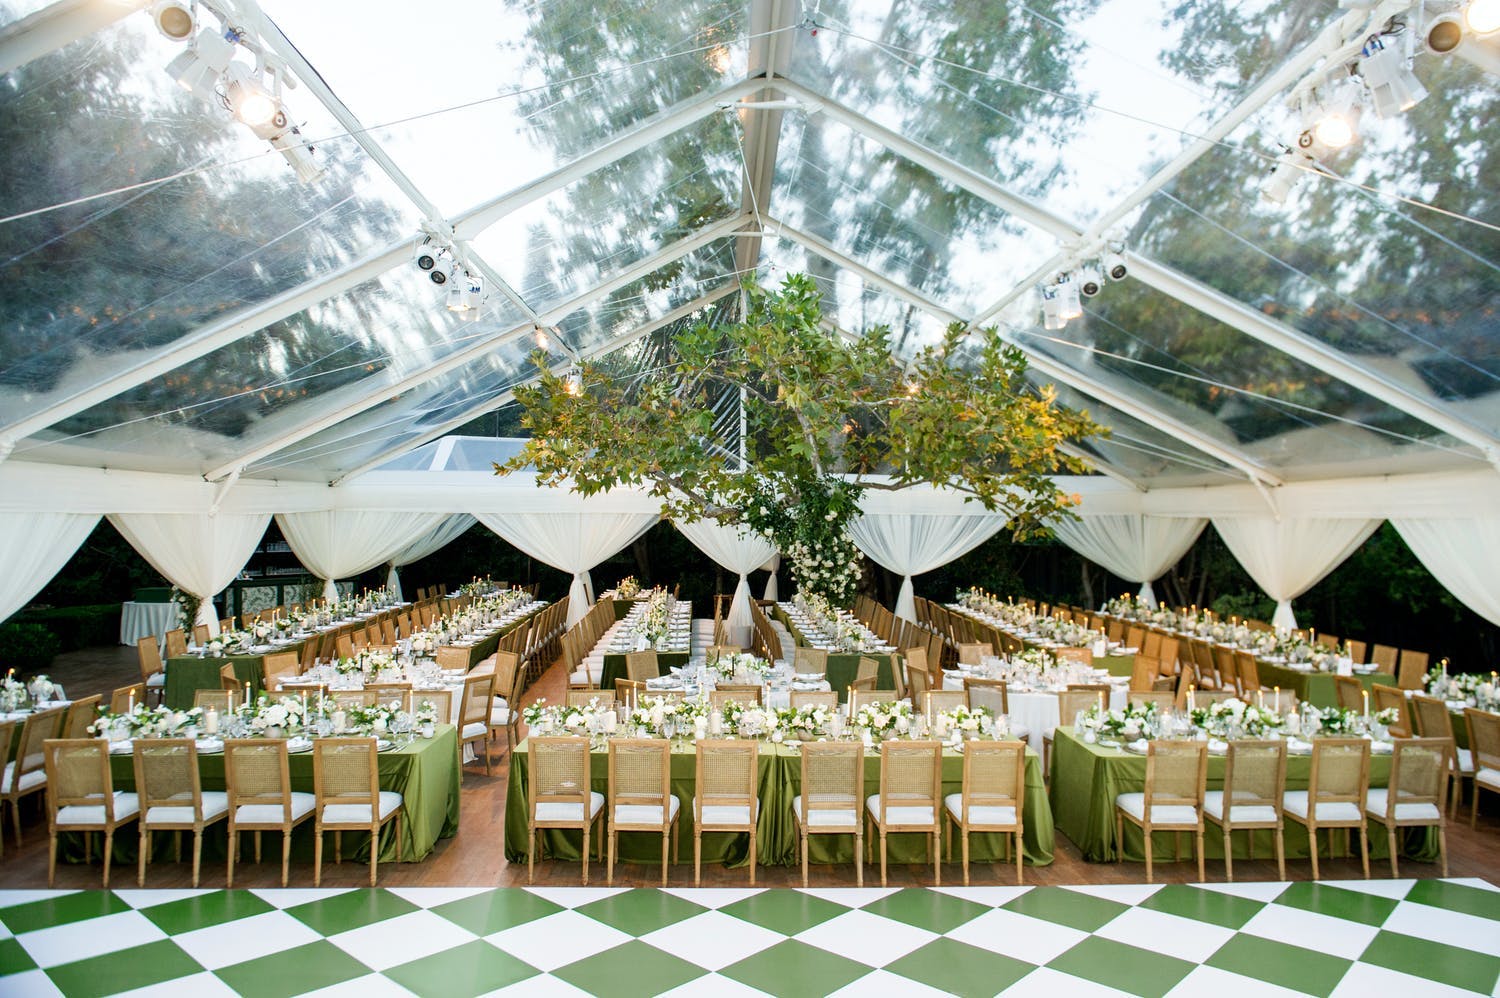 Greenhouse wedding reception 2021 trend | PartySlate